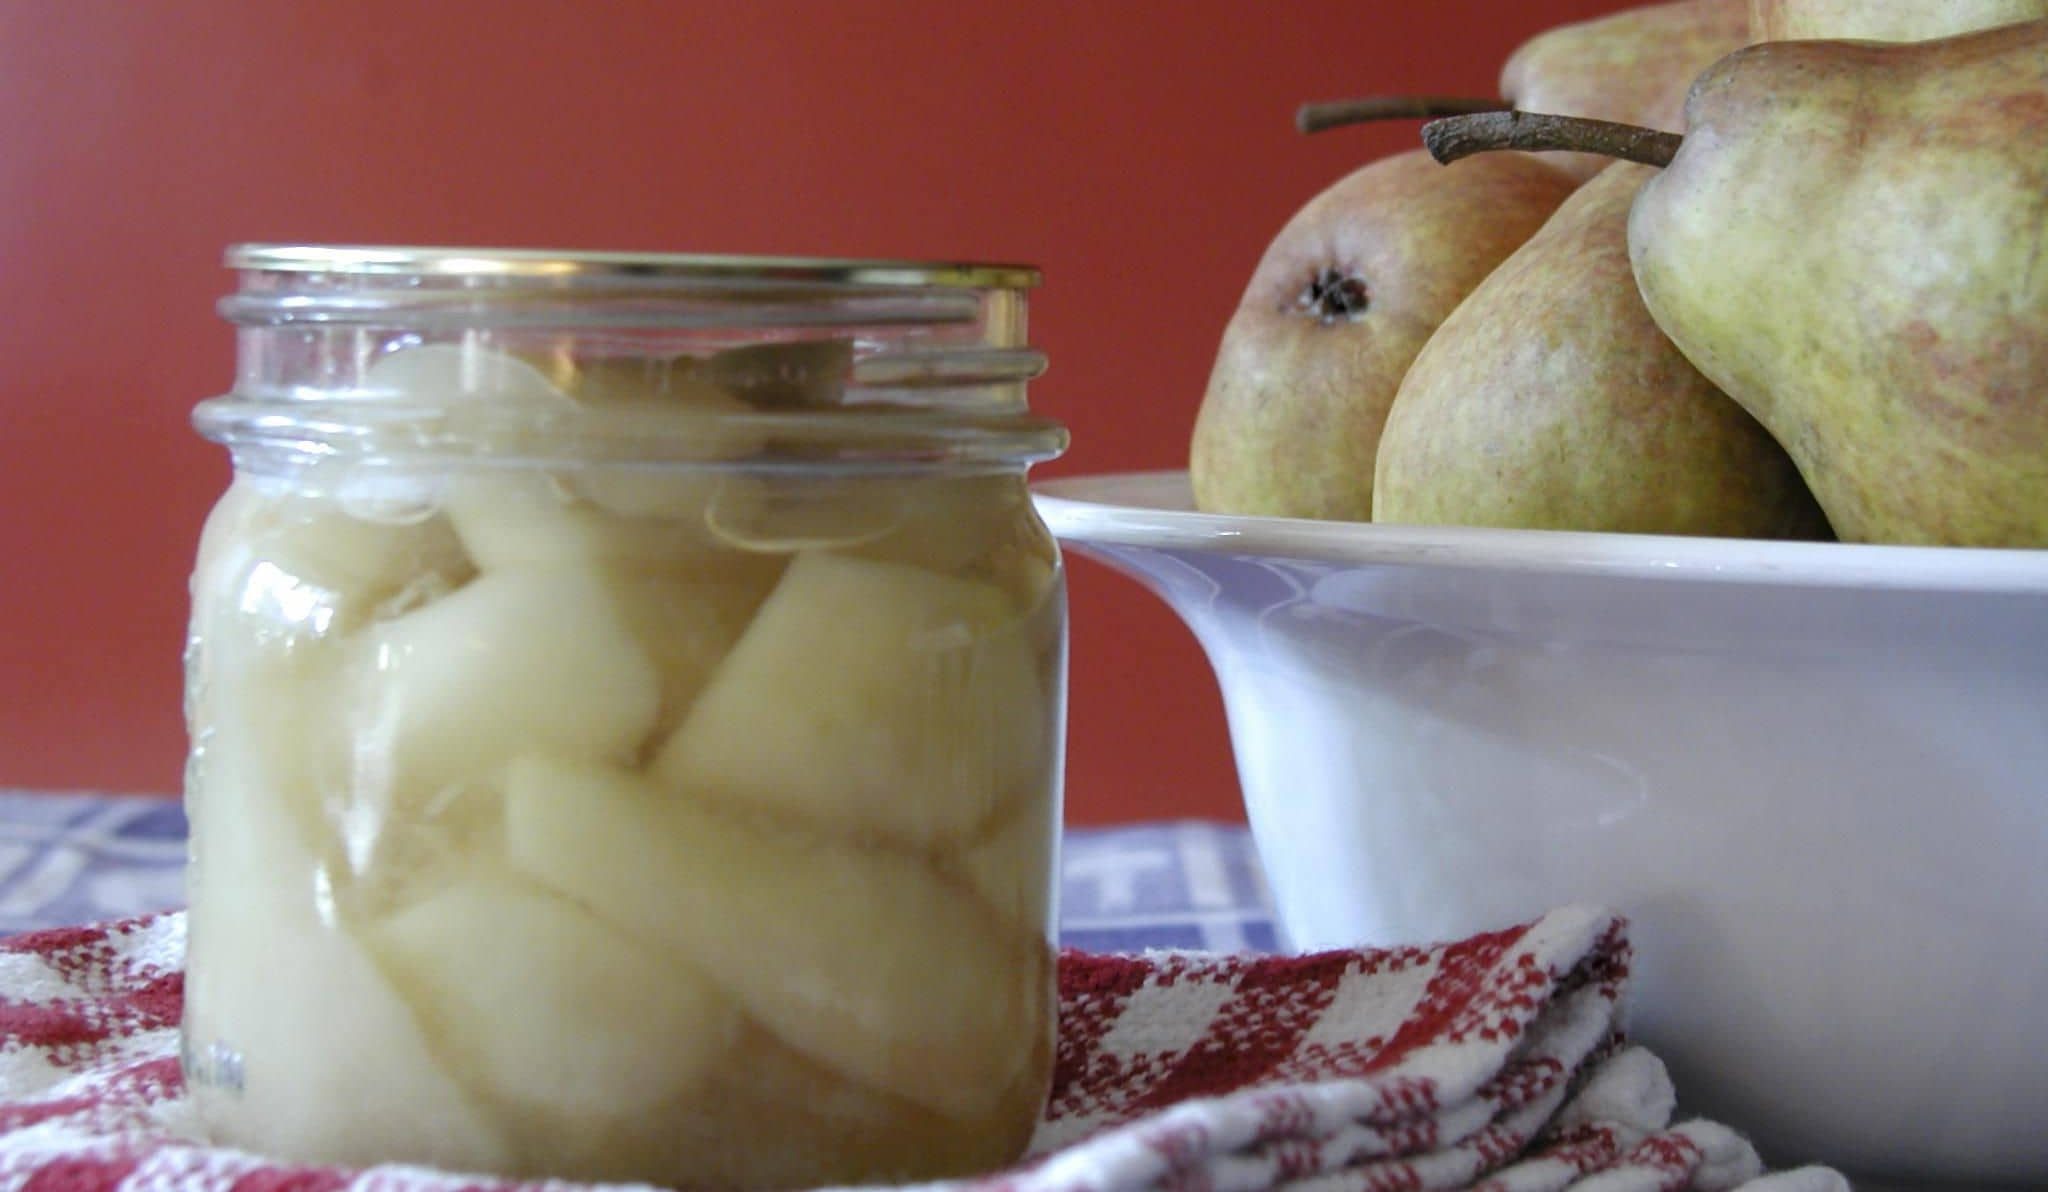  Buy Kieffer Pears | Selling All Types of Kieffer Pears At a Reasonable Price 